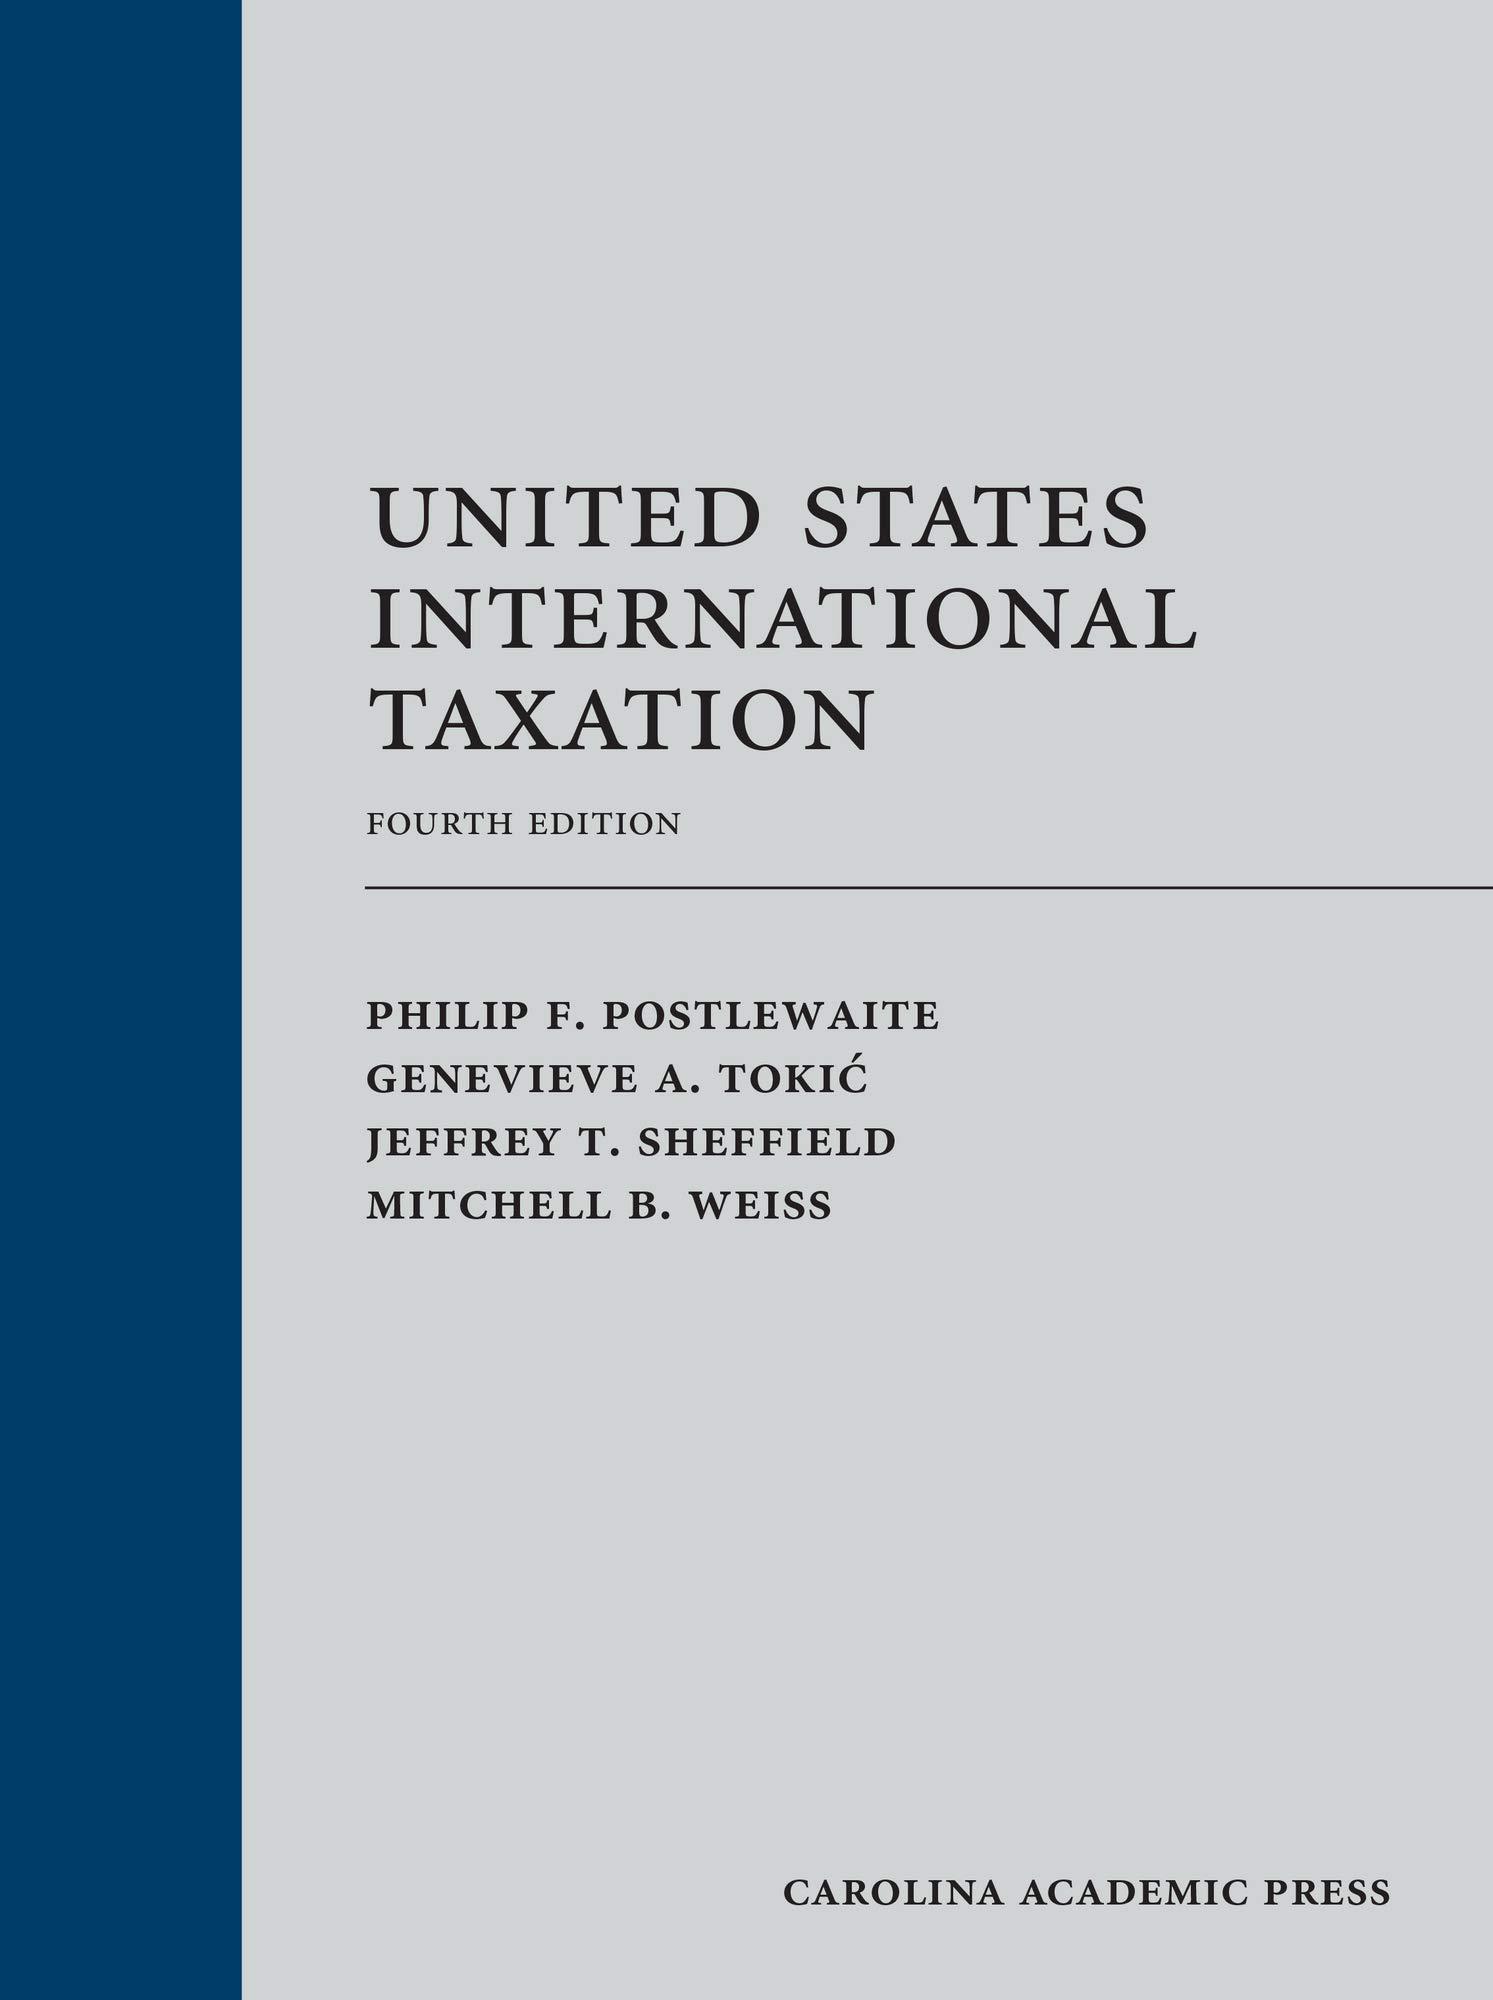 united states international taxation 4th edition philip postlewaite, genevieve tokic, jeffrey sheffield,